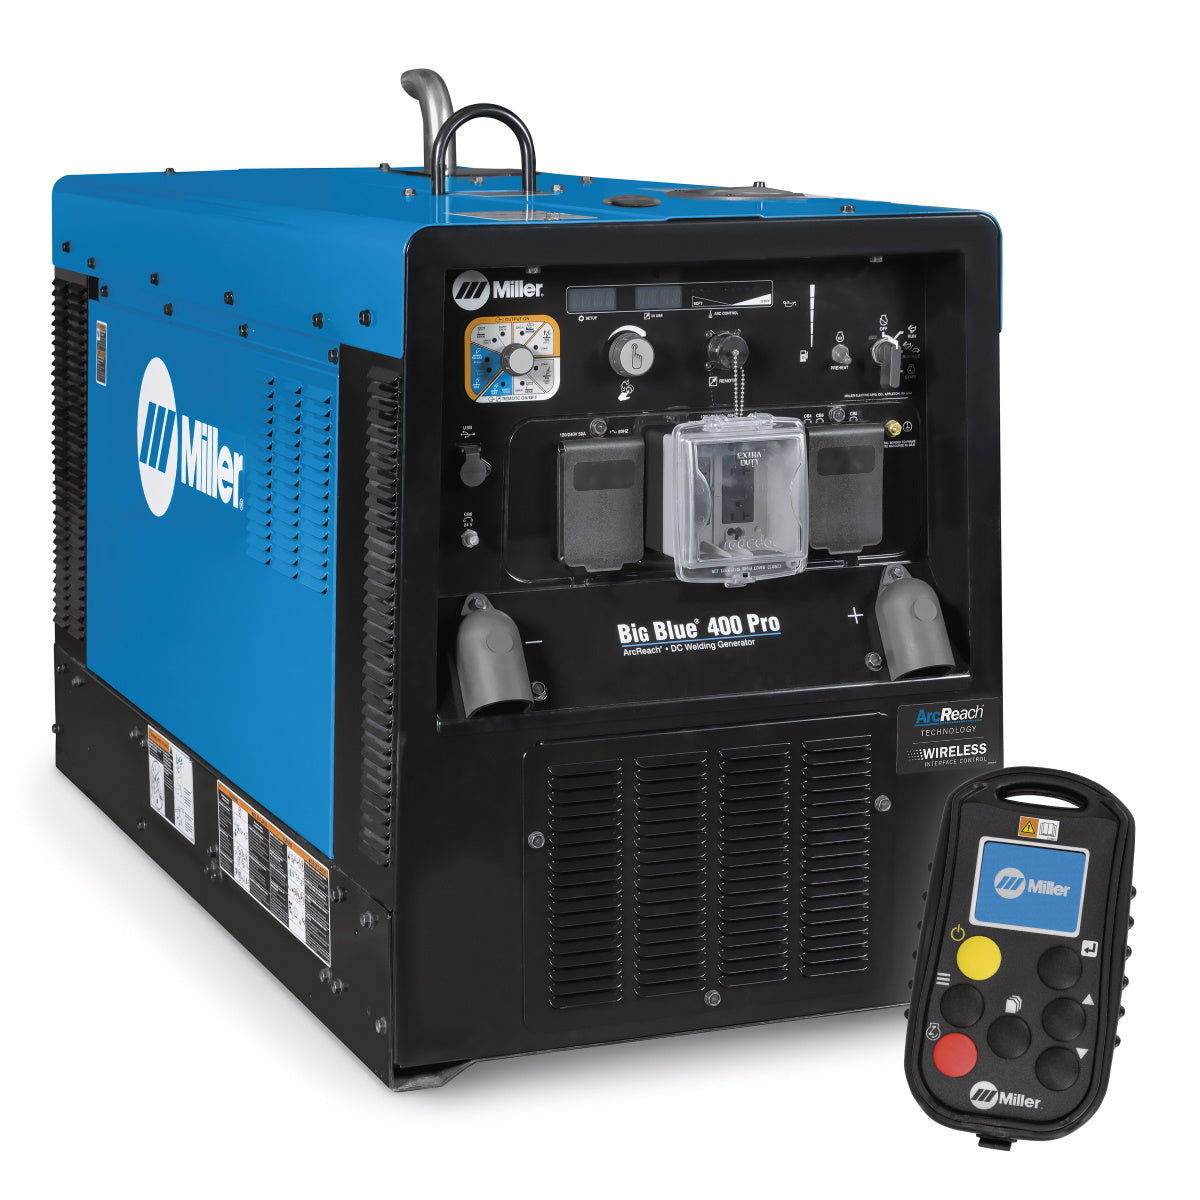 Miller Big Blue 400 Pro ArcReach Kubota Welder/Generator w/WIC (907732013)